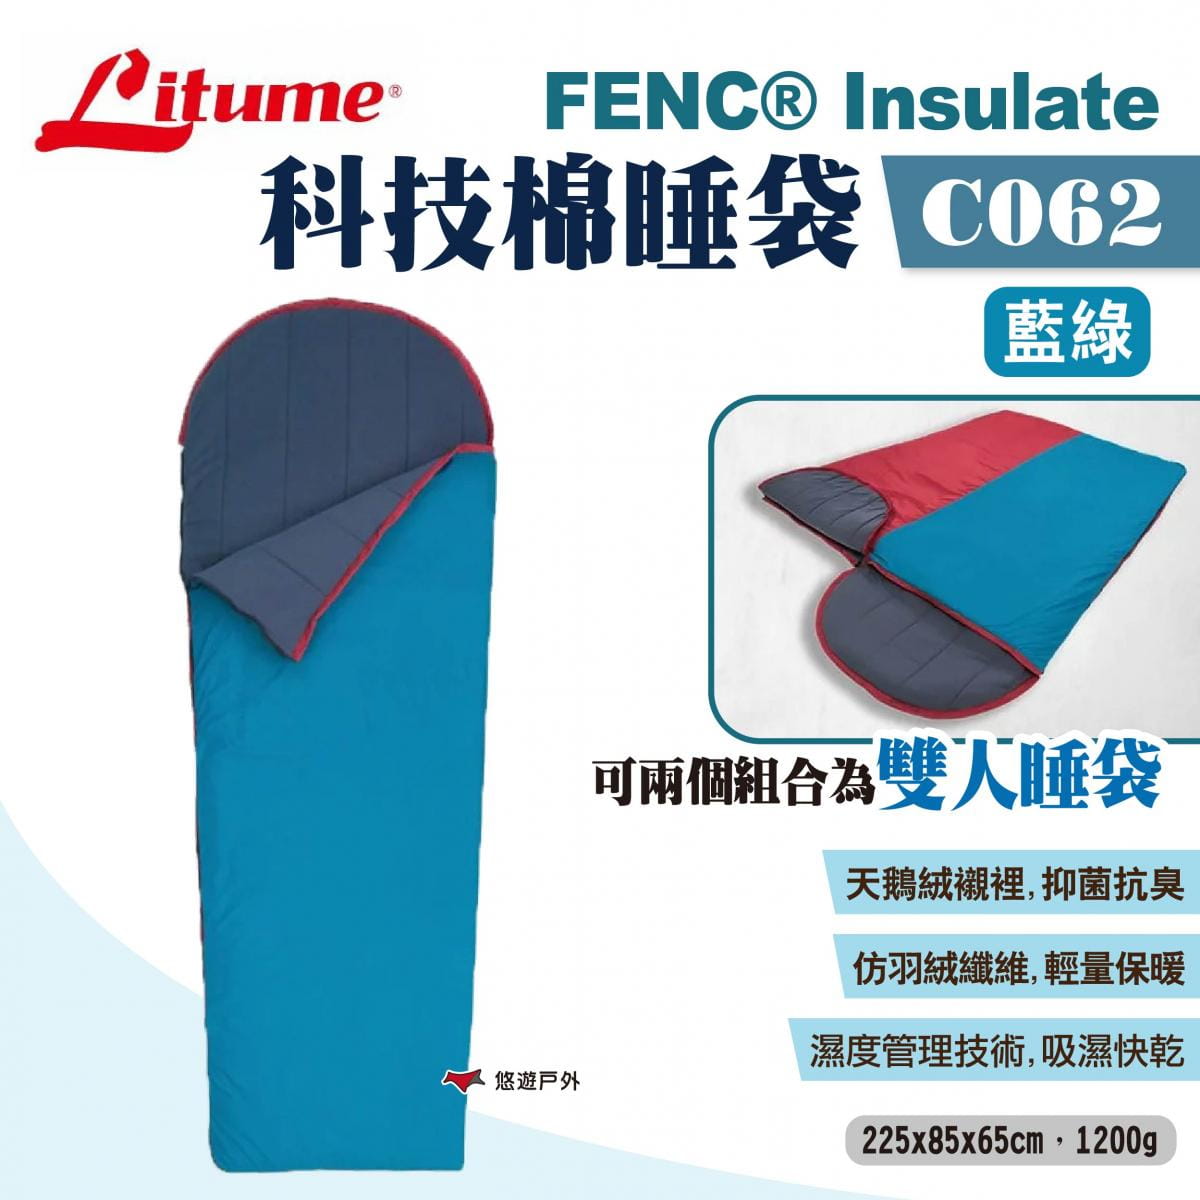 【LITUME】意都美 FENC® Insulate 科技棉睡袋 C062藍綠 悠遊戶外 1